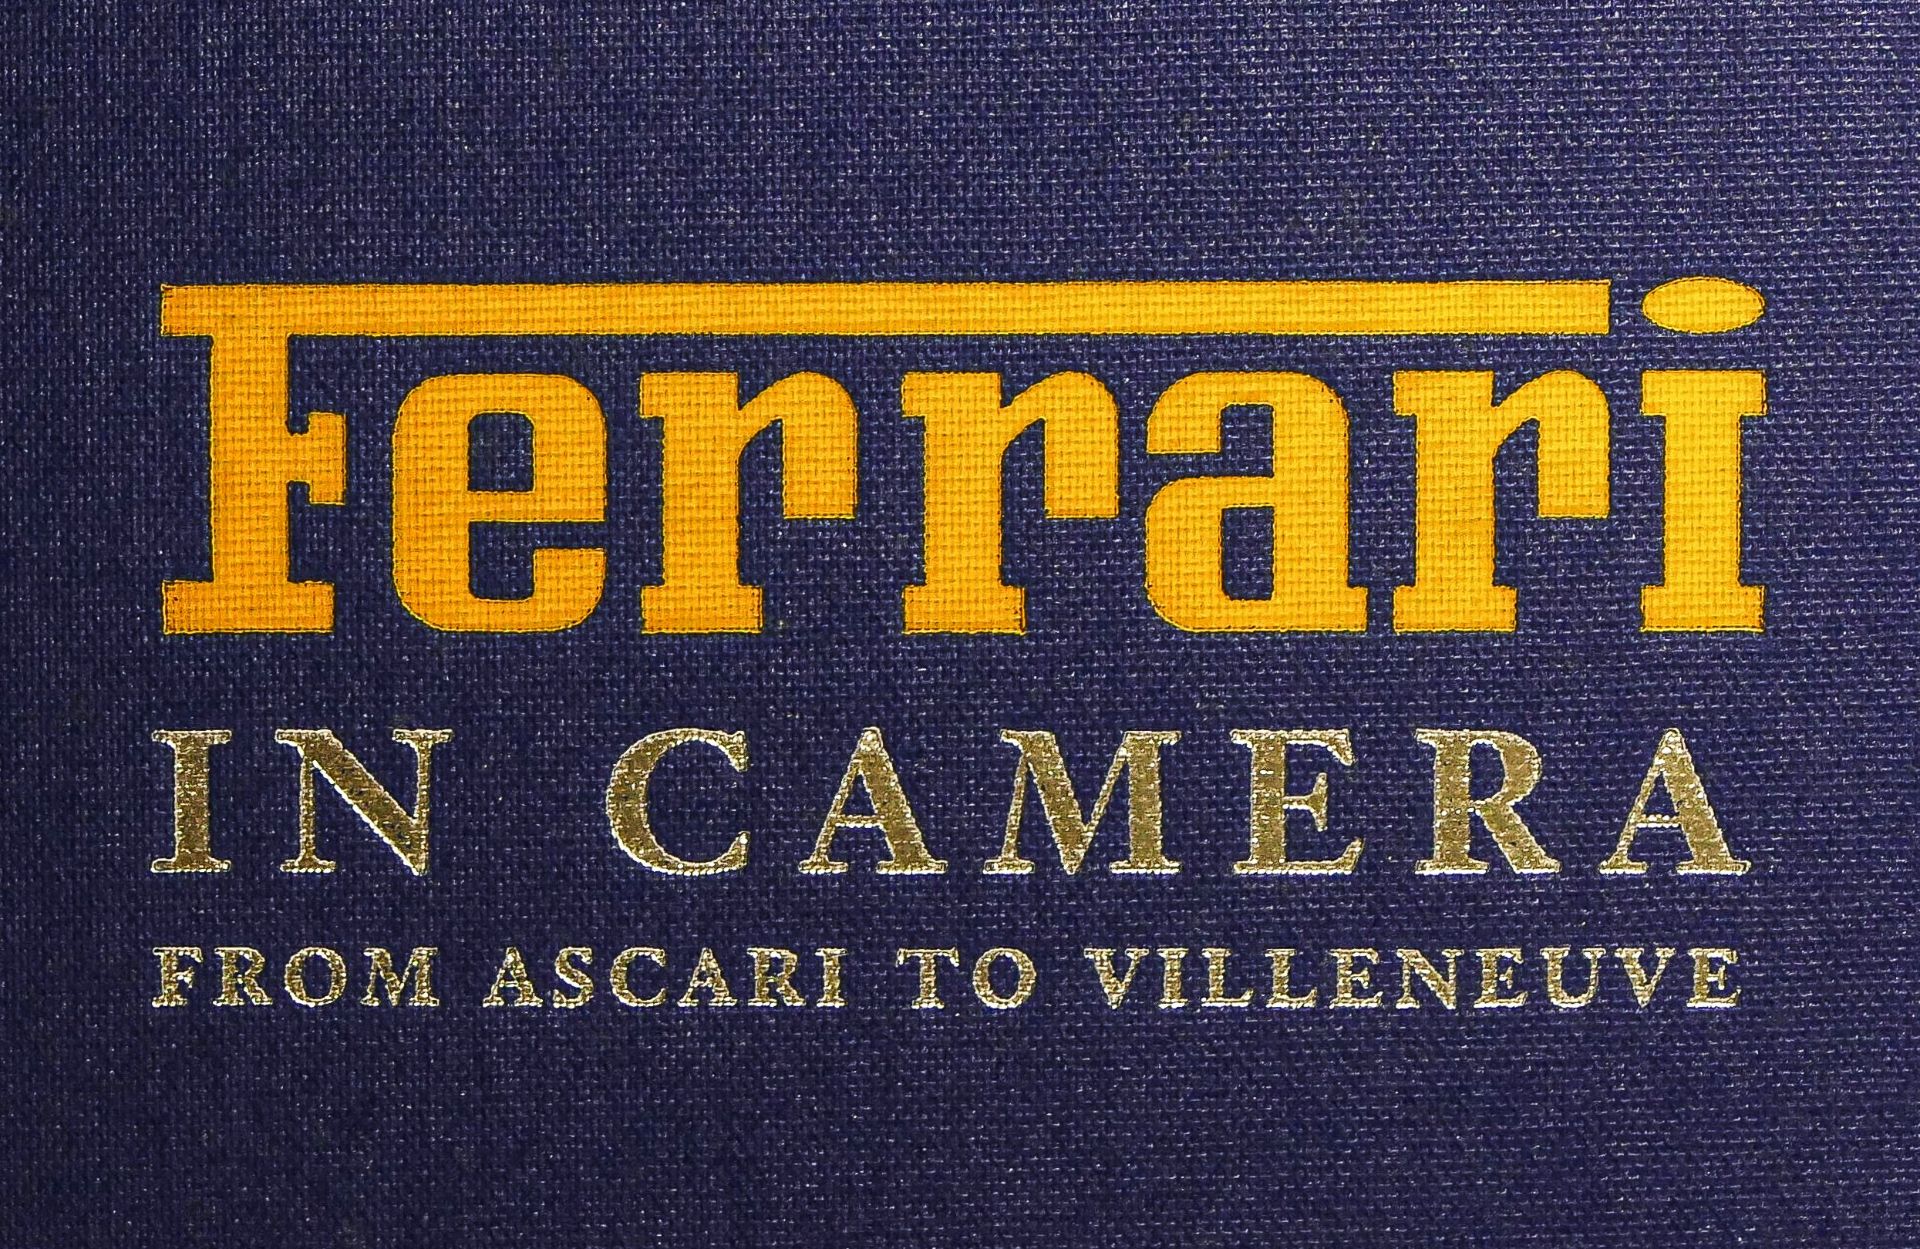 "Ferrari in Camera from Ascari to Villeneuve", Jeffrey Goddard and Doug Nye. - Image 2 of 5